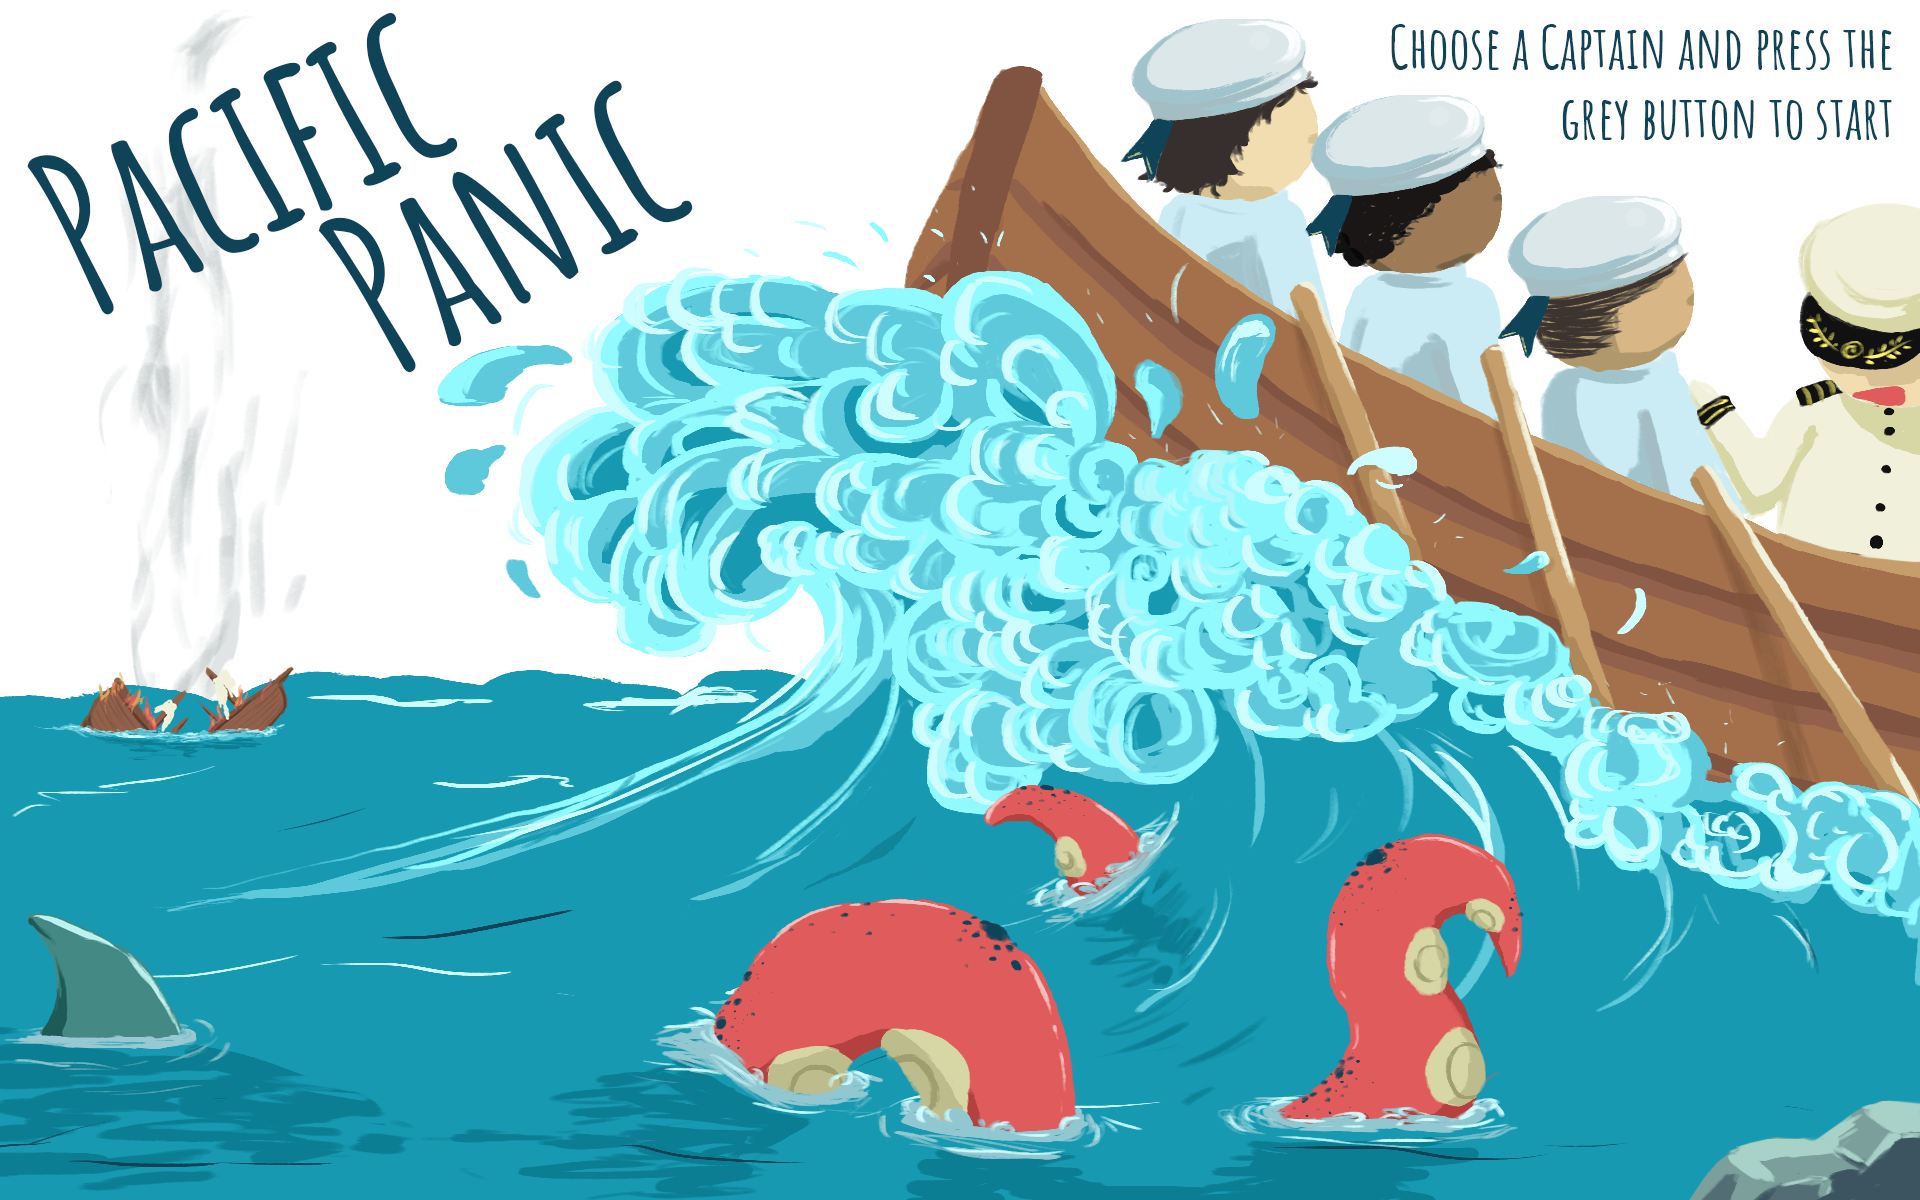 Pacific Panic